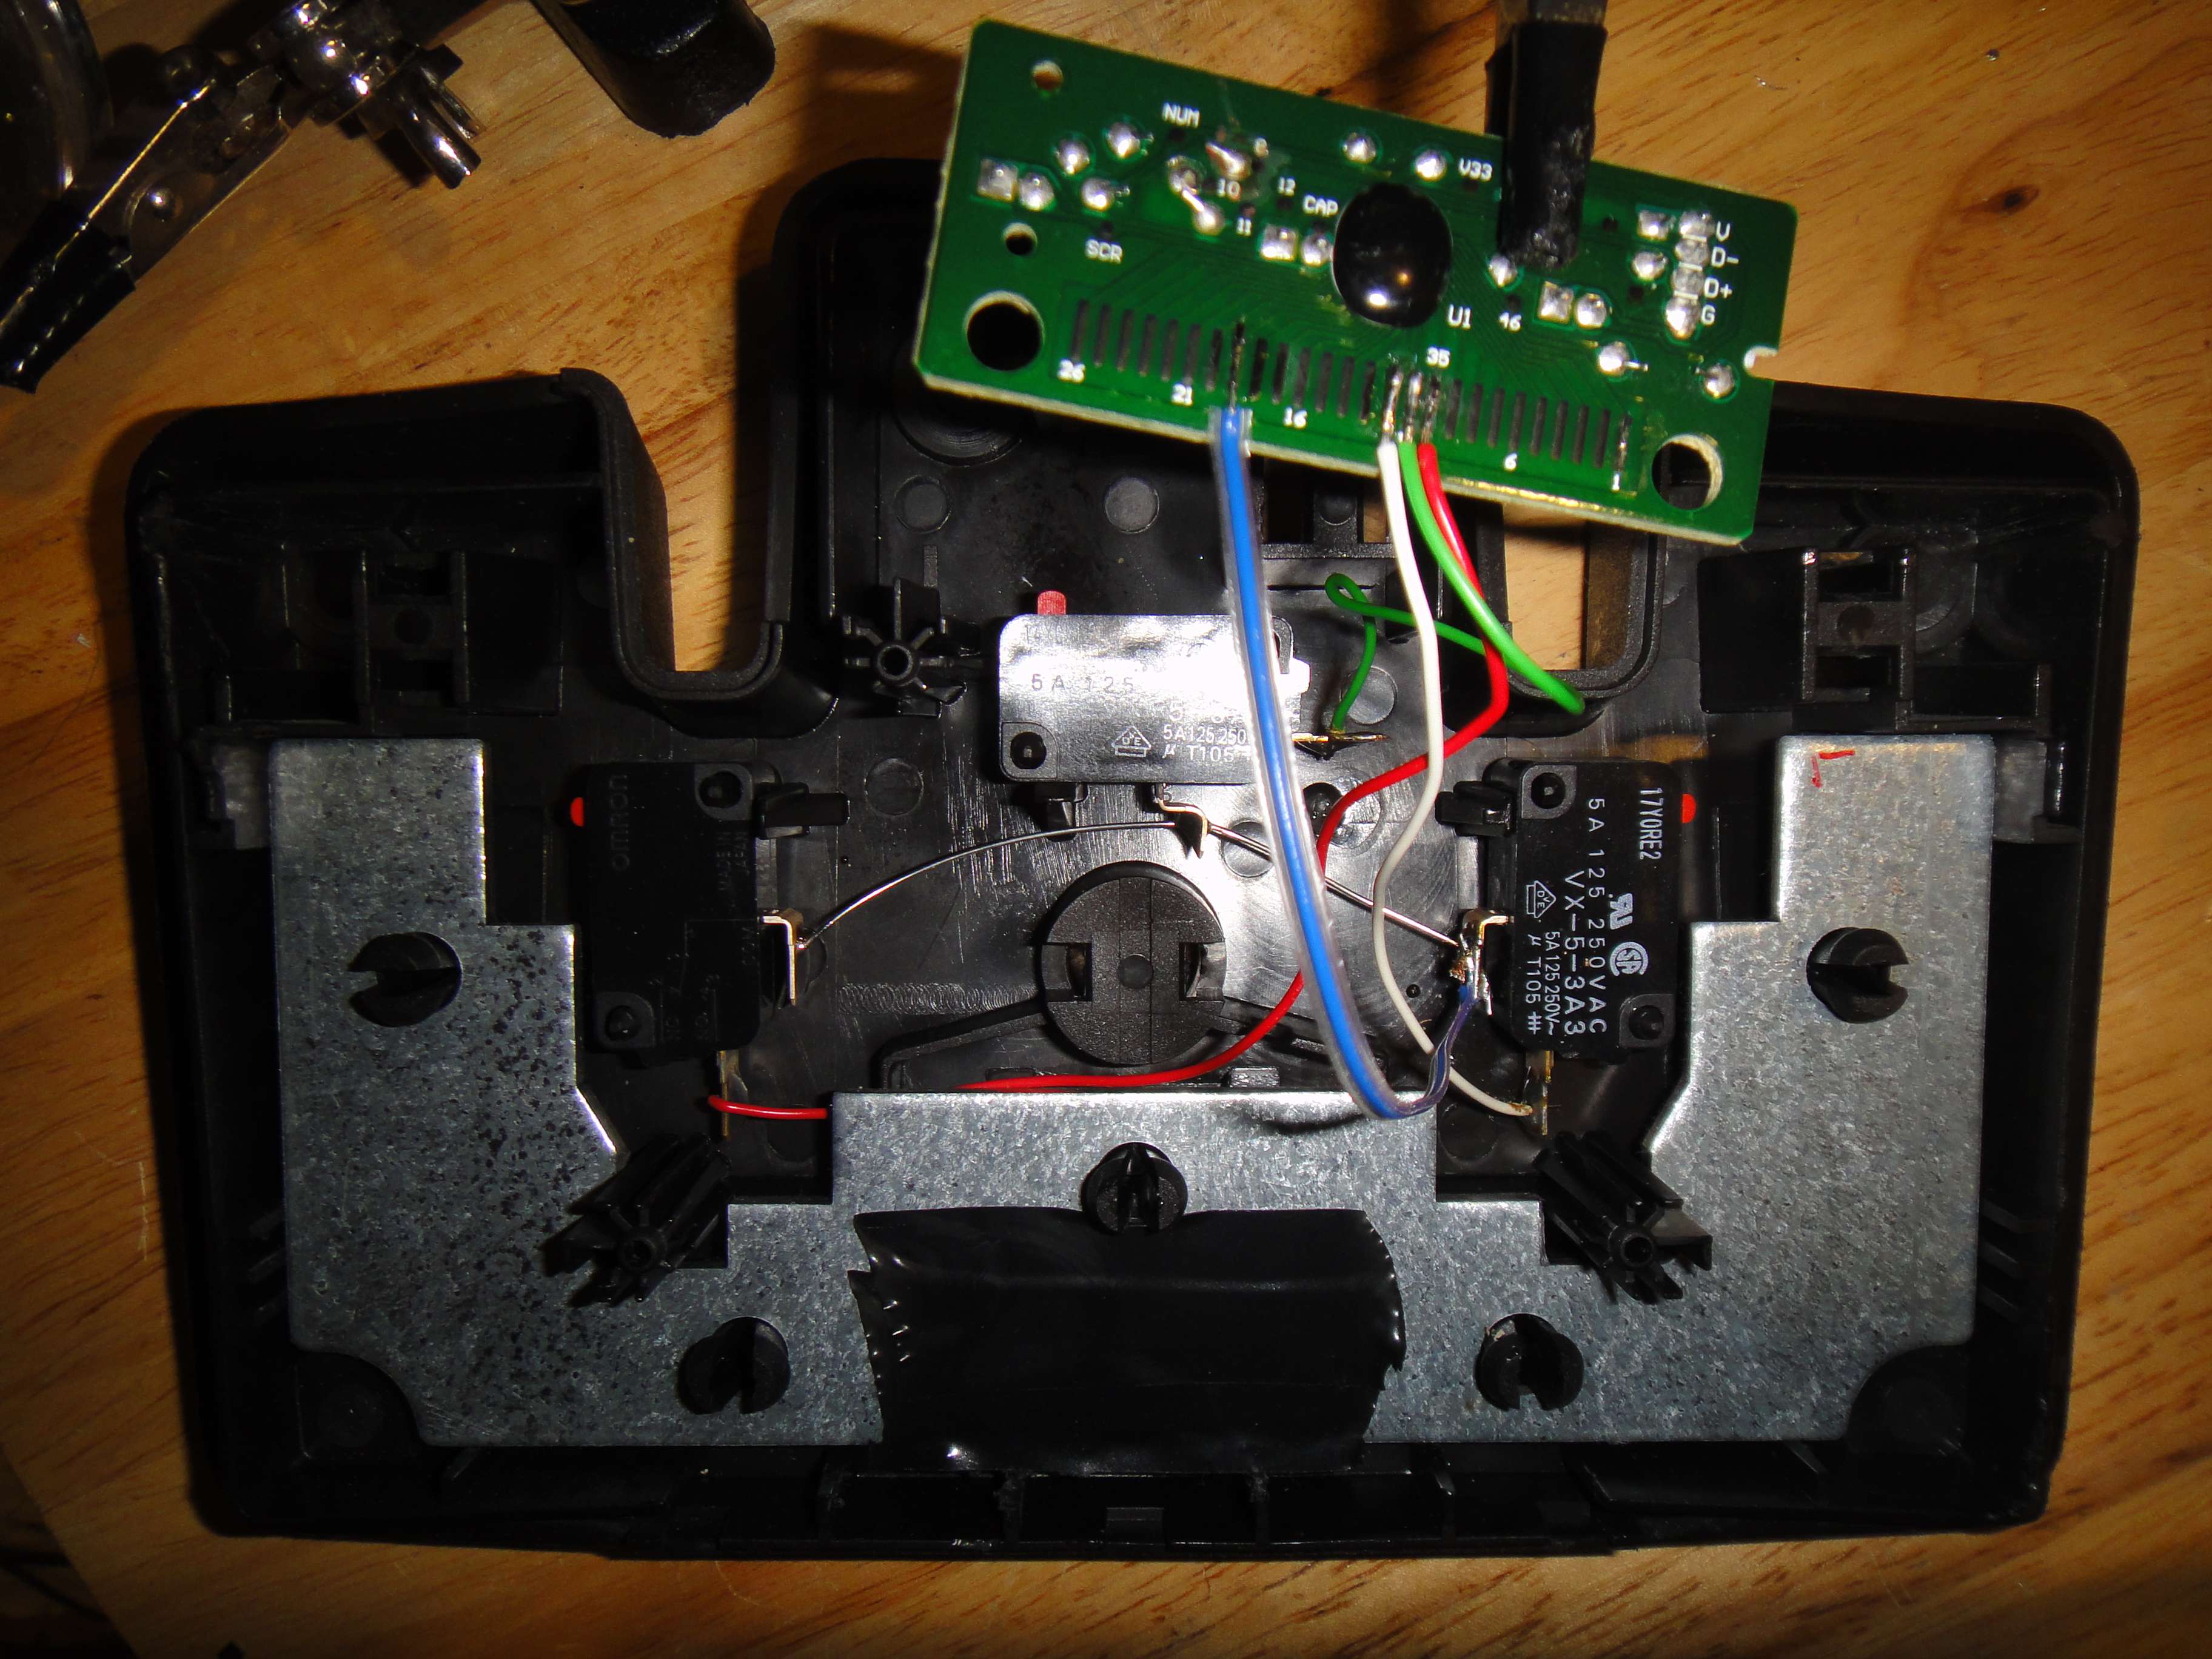 Phillips LFH-0210 dictation pedal turned into custom HID input device (HP KU-0316 keyboard mod)